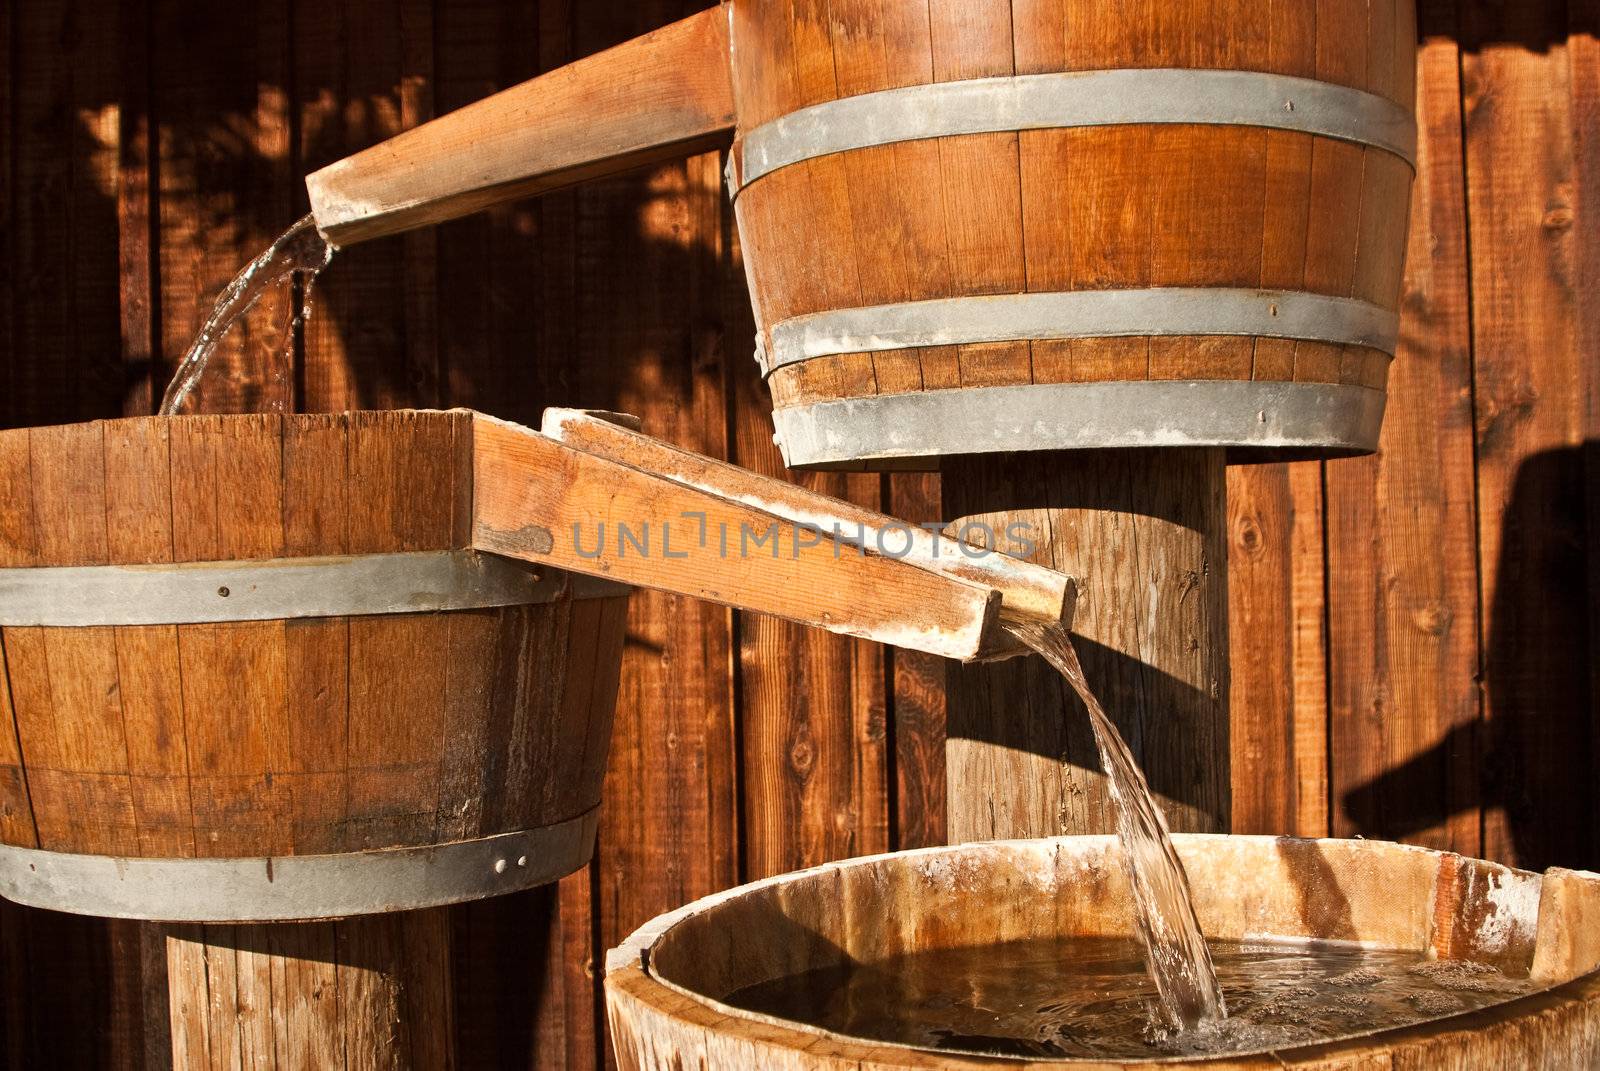 Wooden water barrels funnel water through shutes